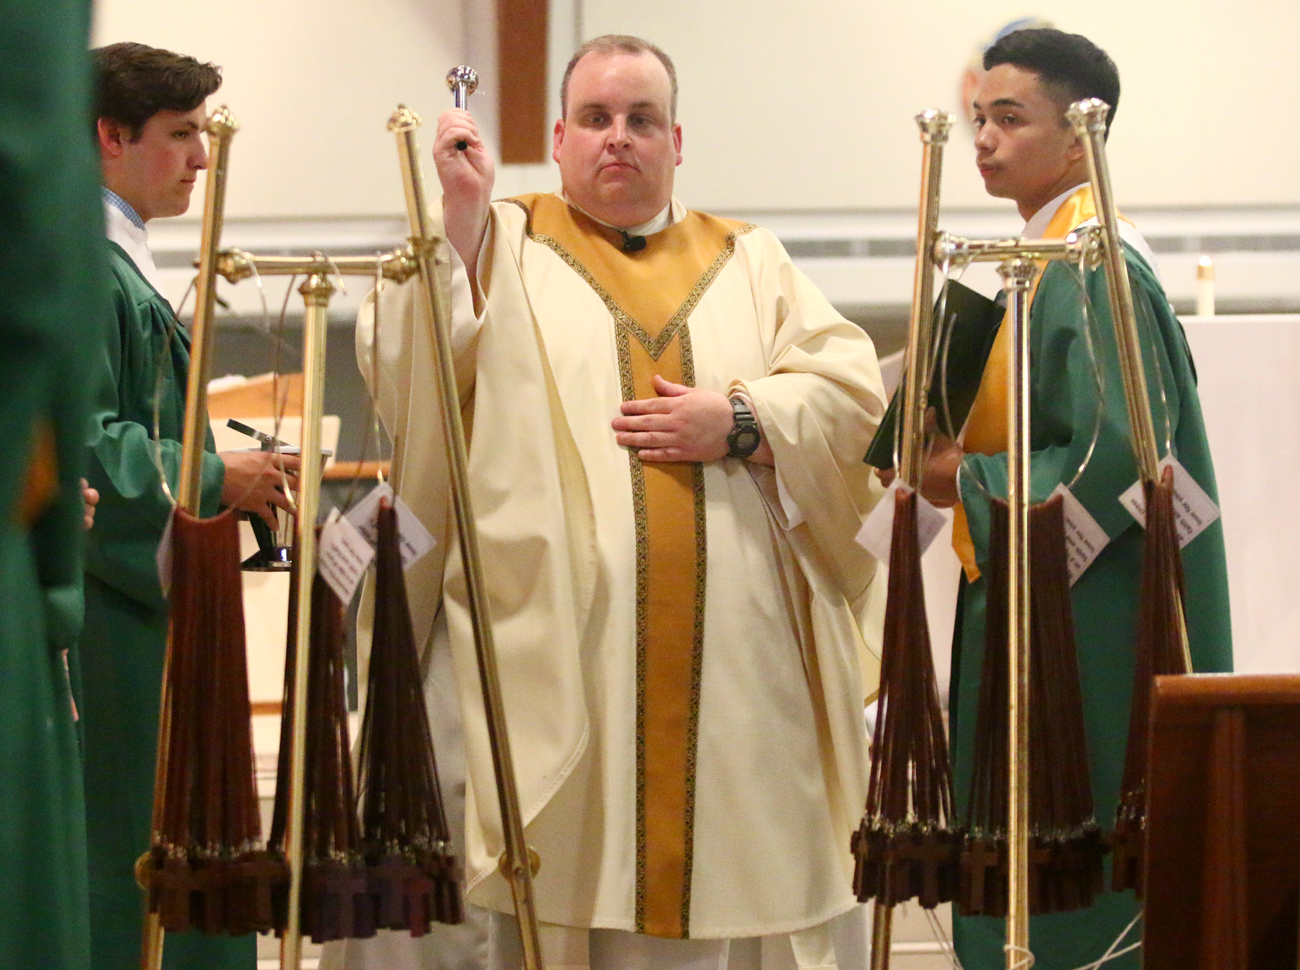 Shanahan H.S. graduates celebrate baccalaureate Mass Catholic